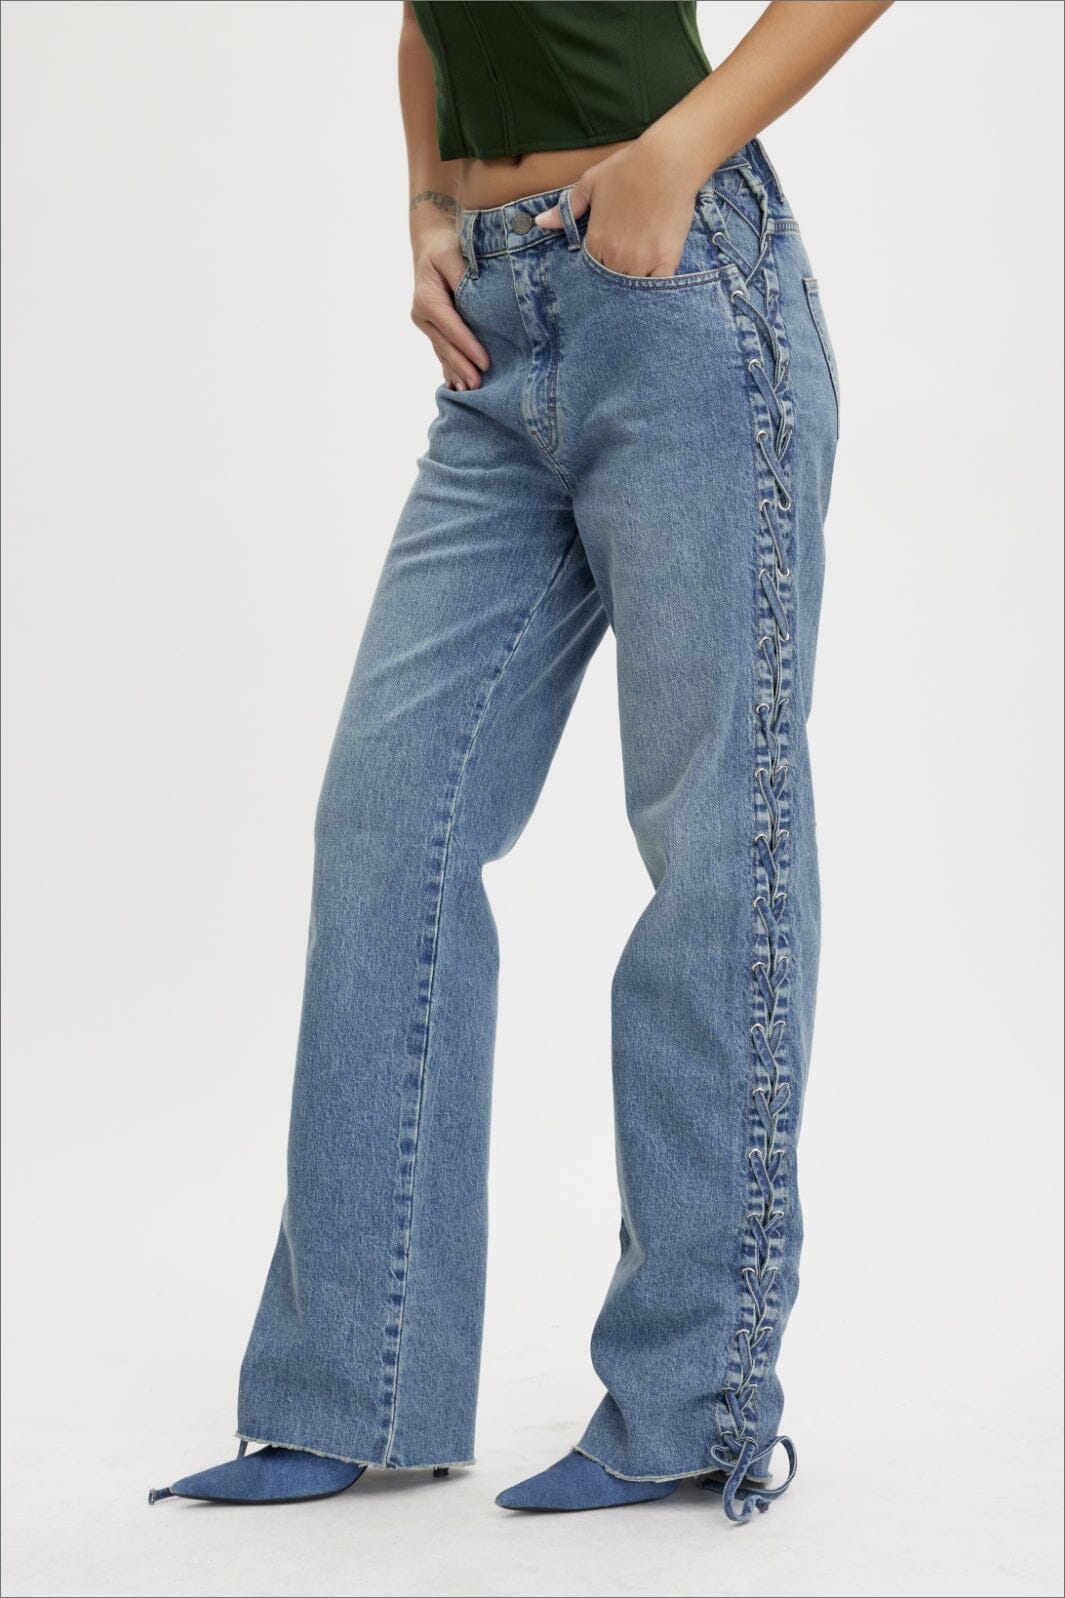 Gestuz - SaimaGZ MW string jeans - Mid blue washed Jeans 